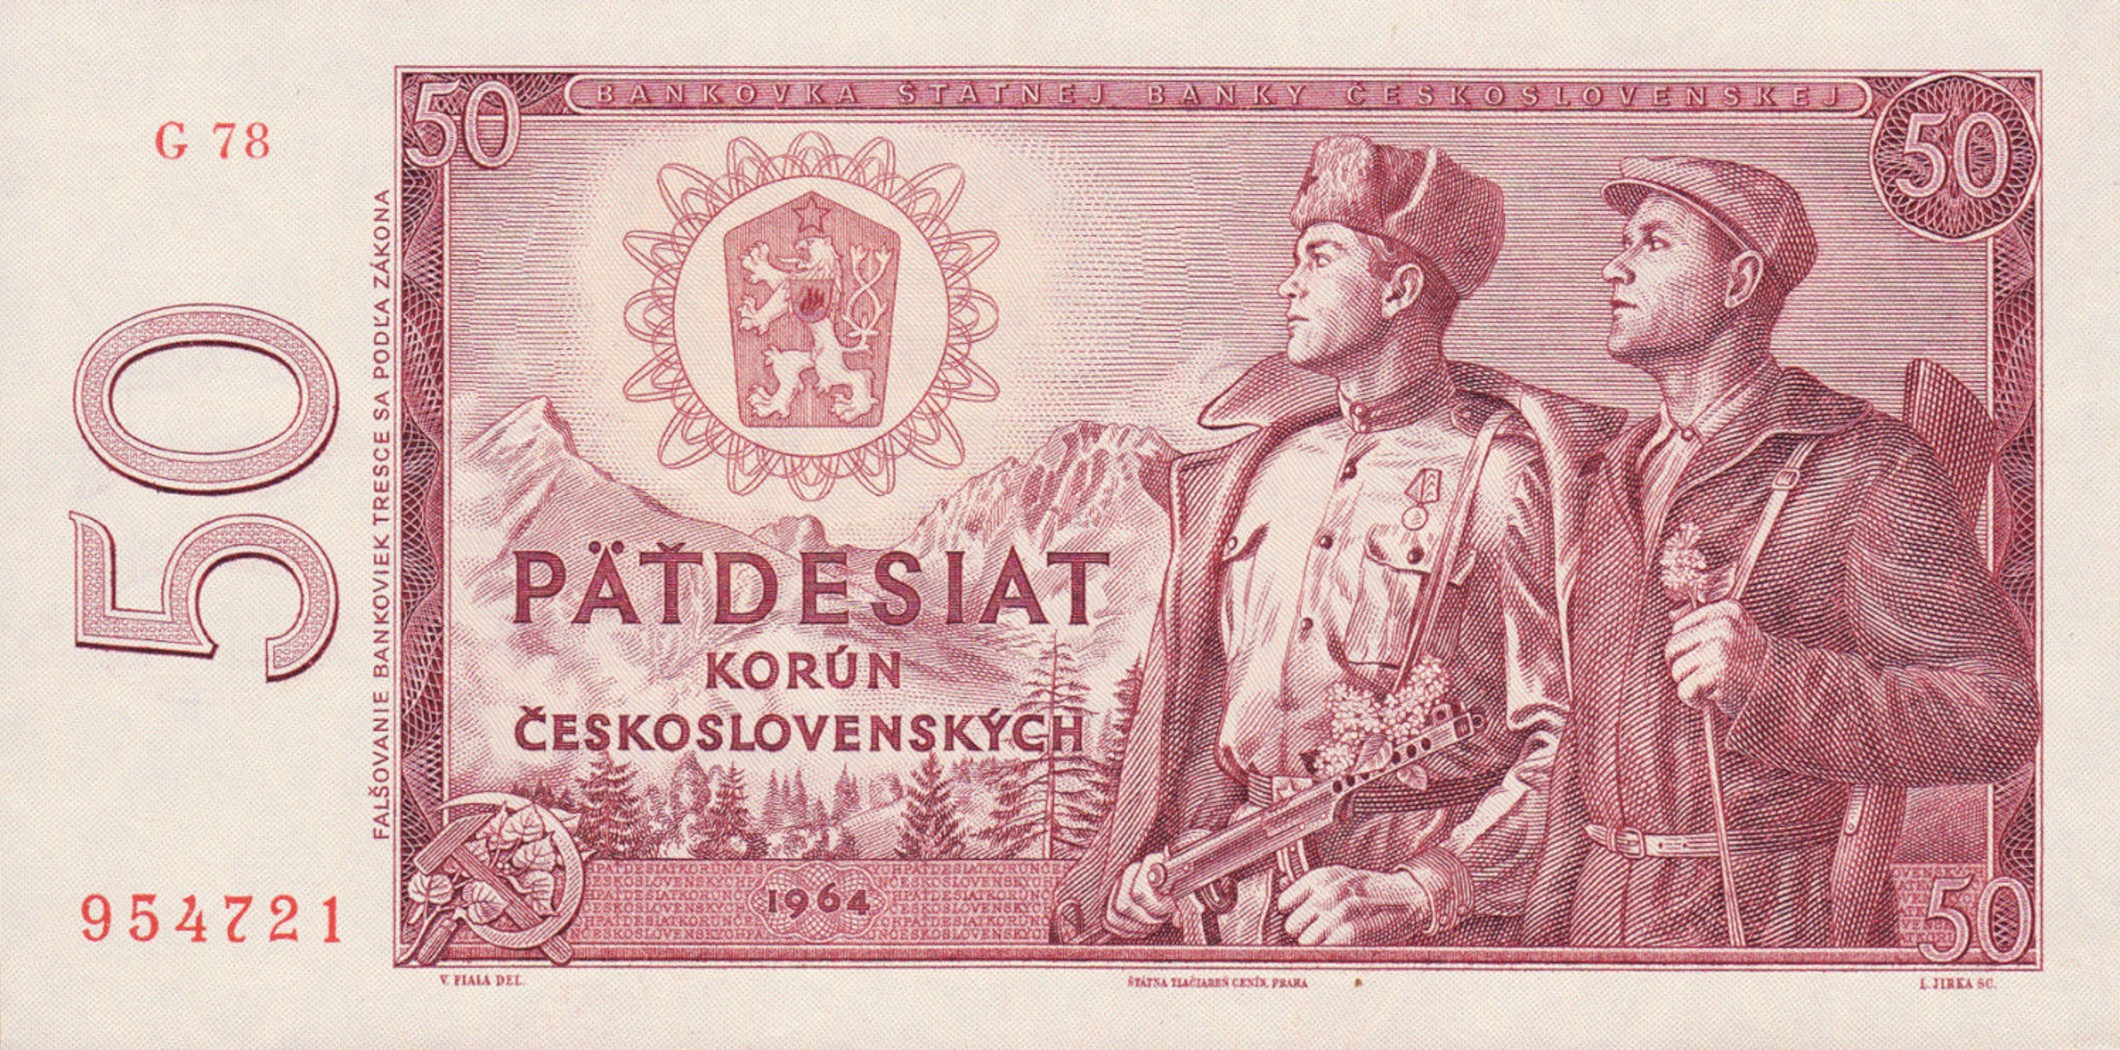 50 Czechoslovak Korun banknote 1964 (Slovnaft Refinery)